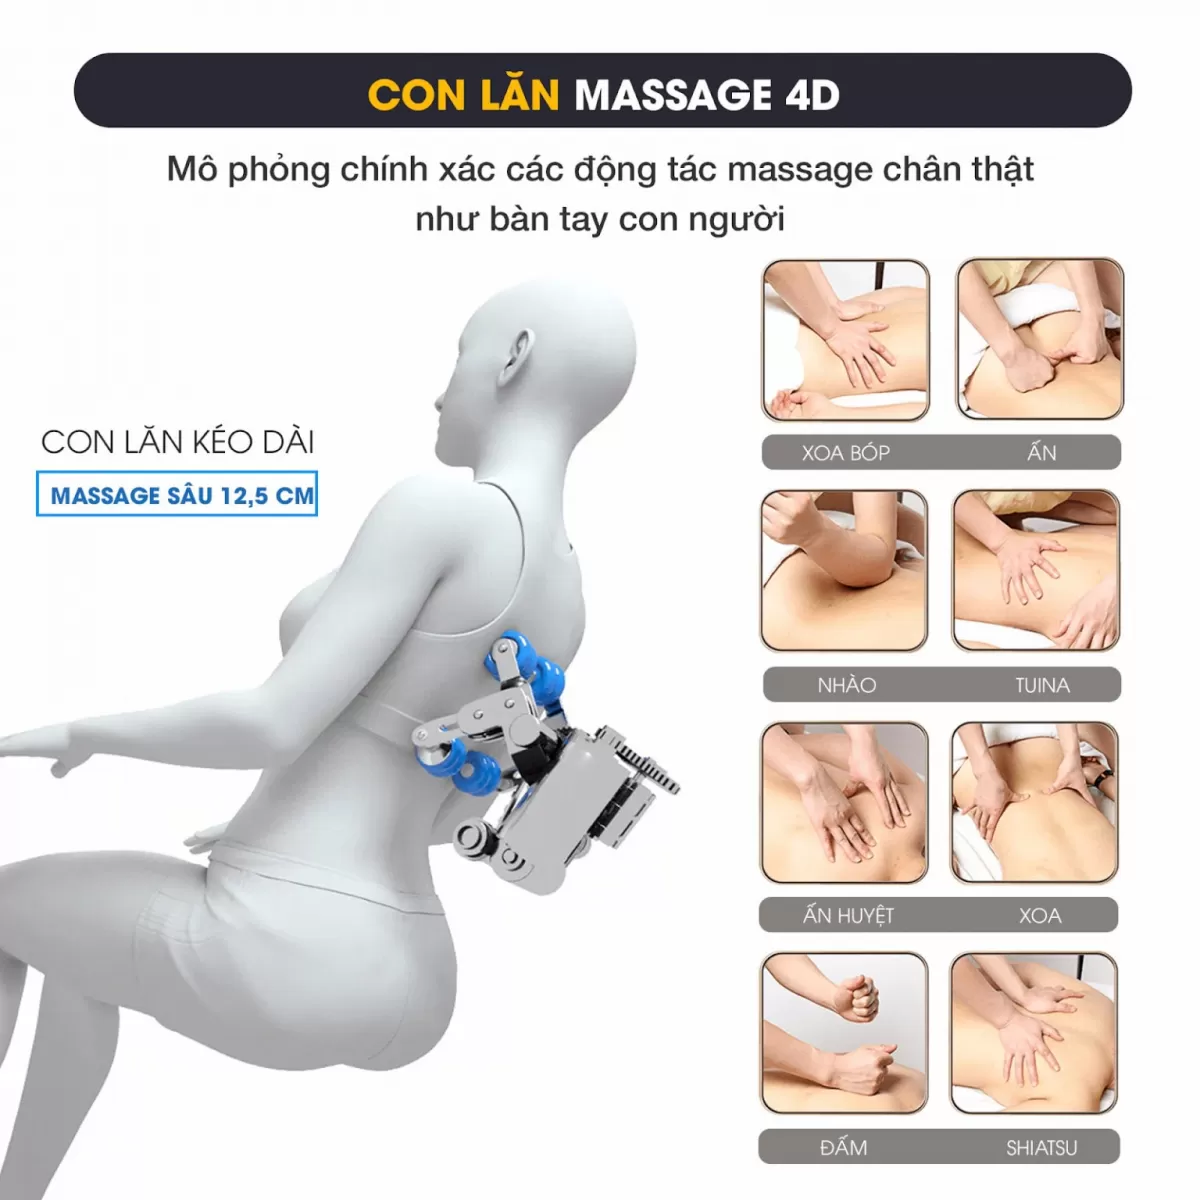 Con lăn massage 4D của Ghế Massage KLC K6688